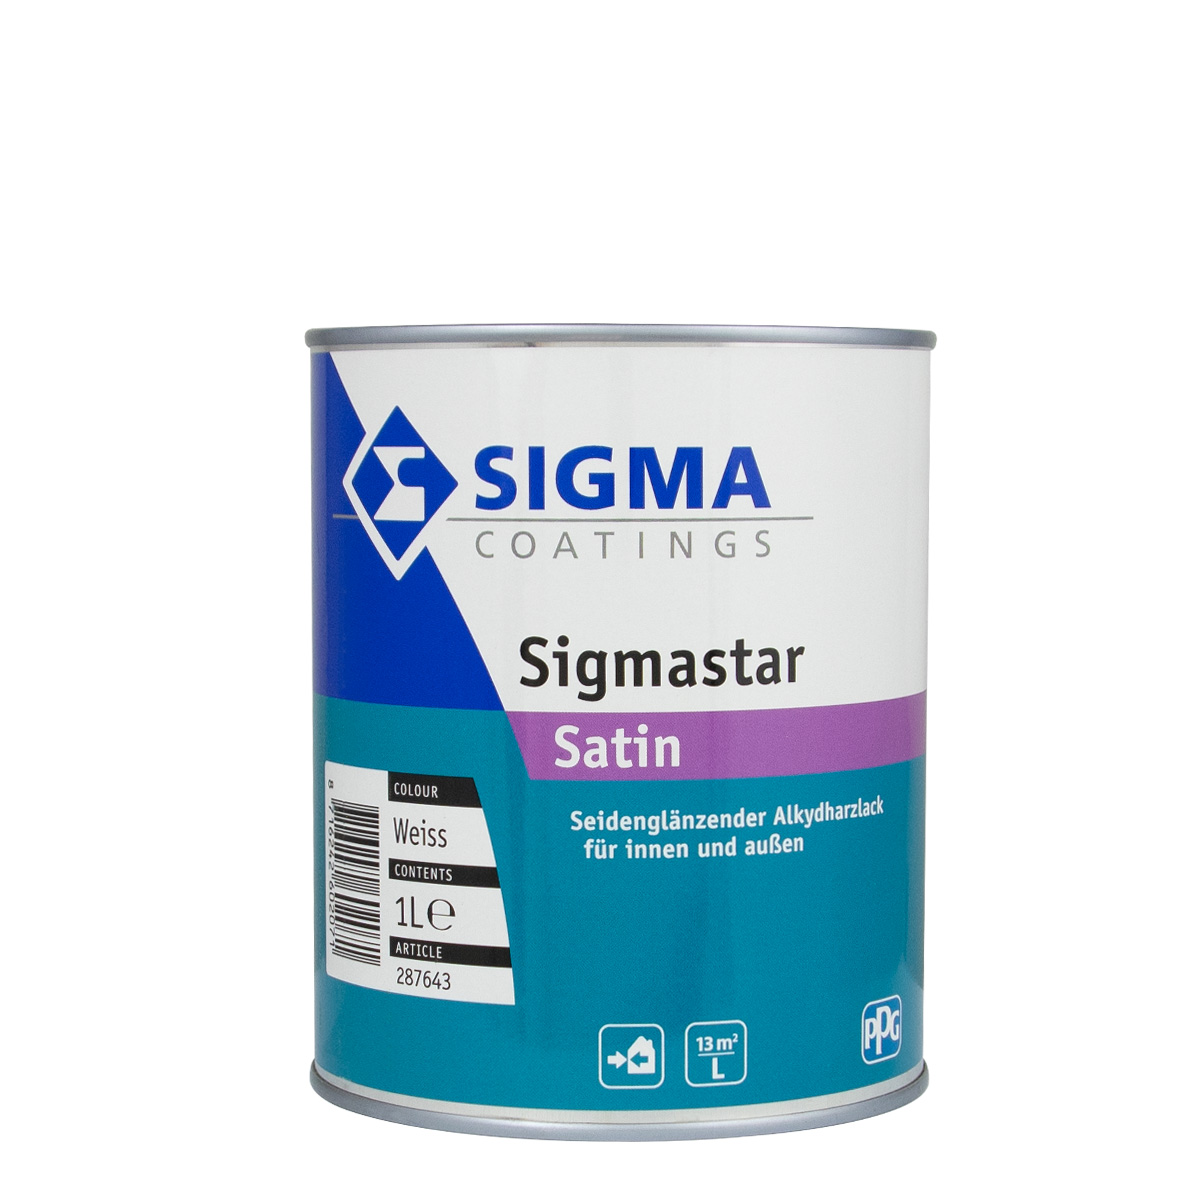 Sigma_Sigmastar_Satin_1l_gross